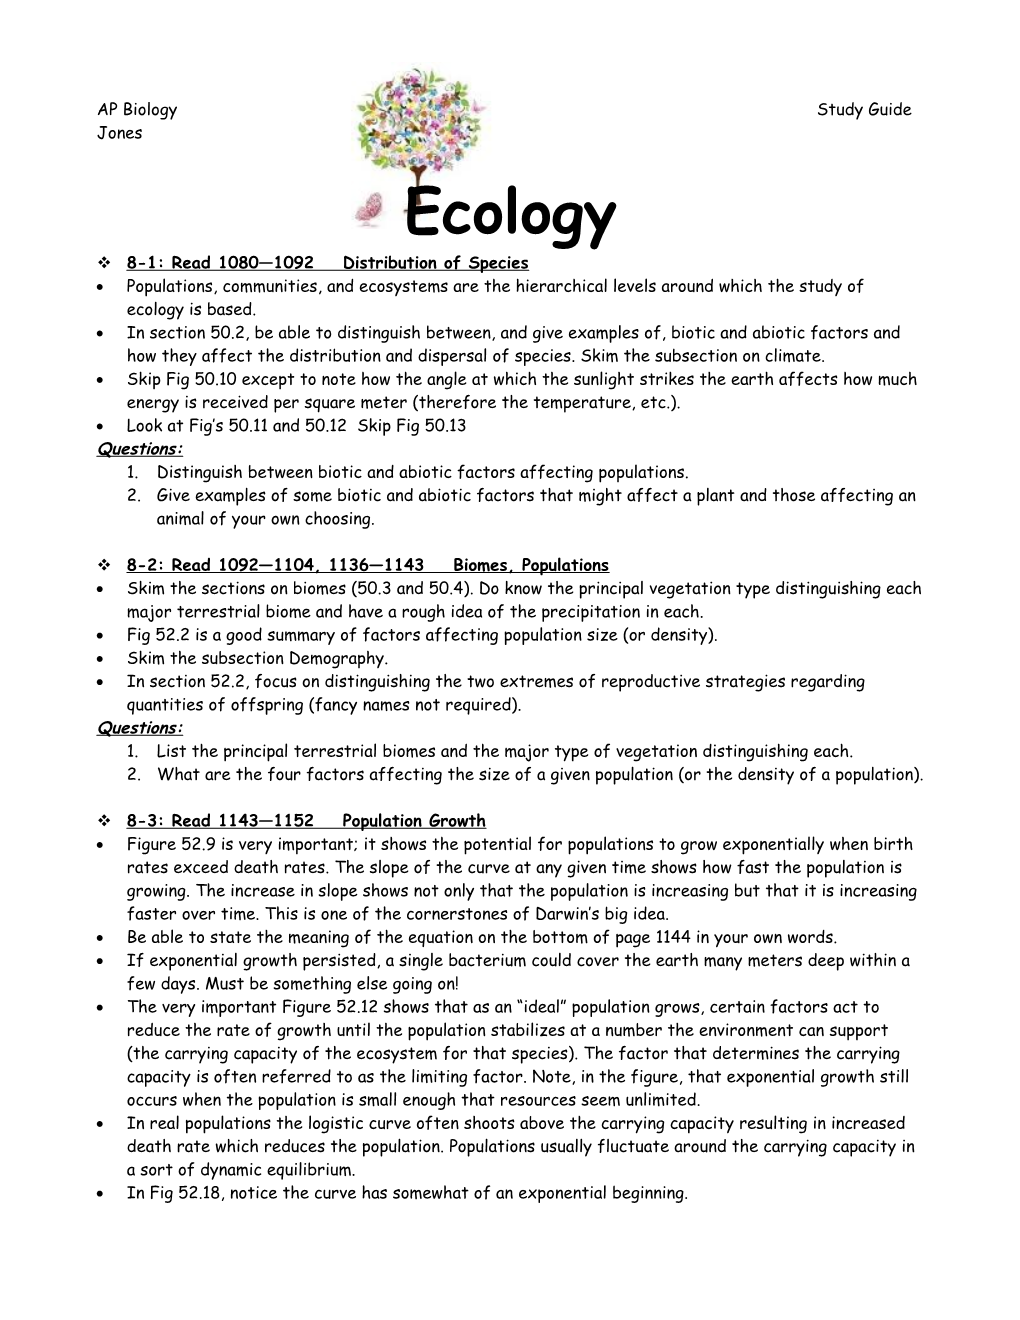 AP Biology Study Guide s1